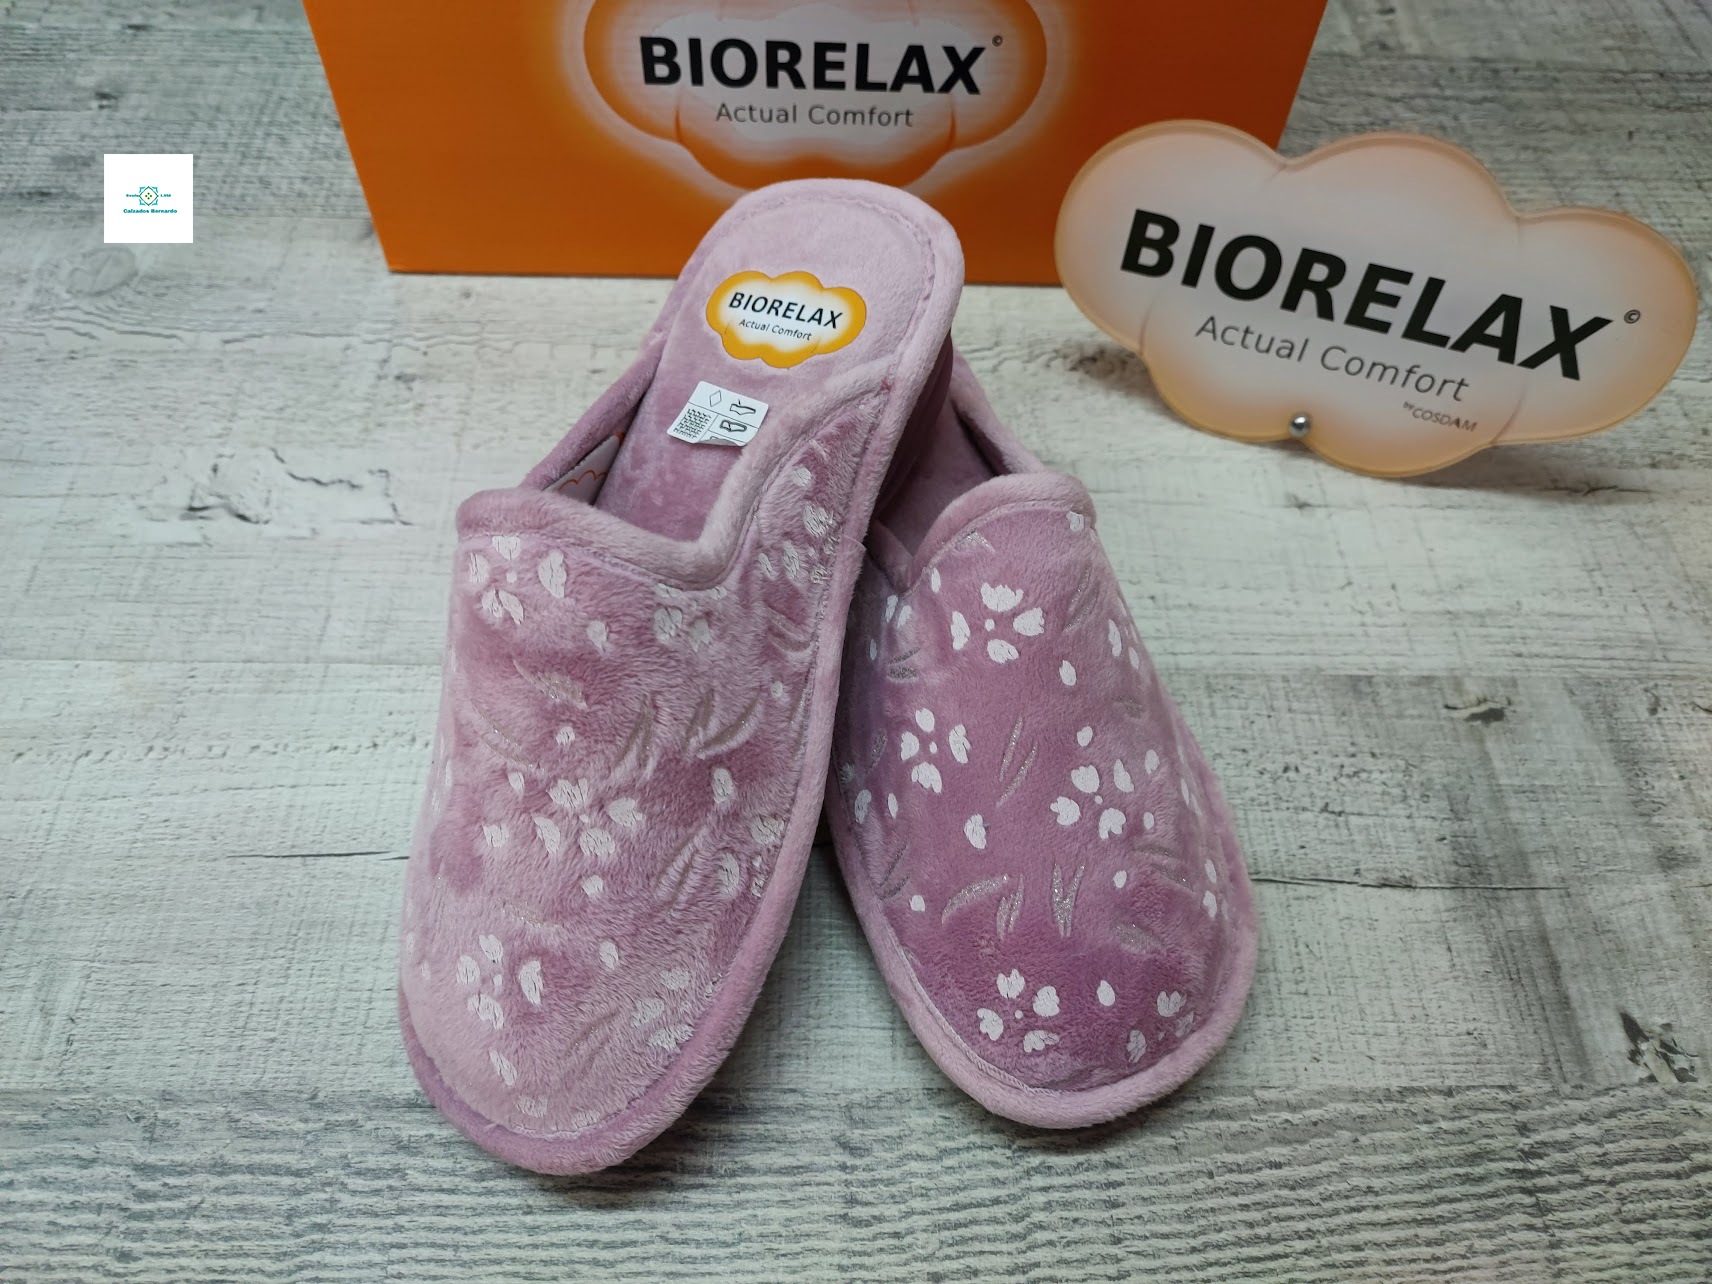 Biorelax lilly lavanda